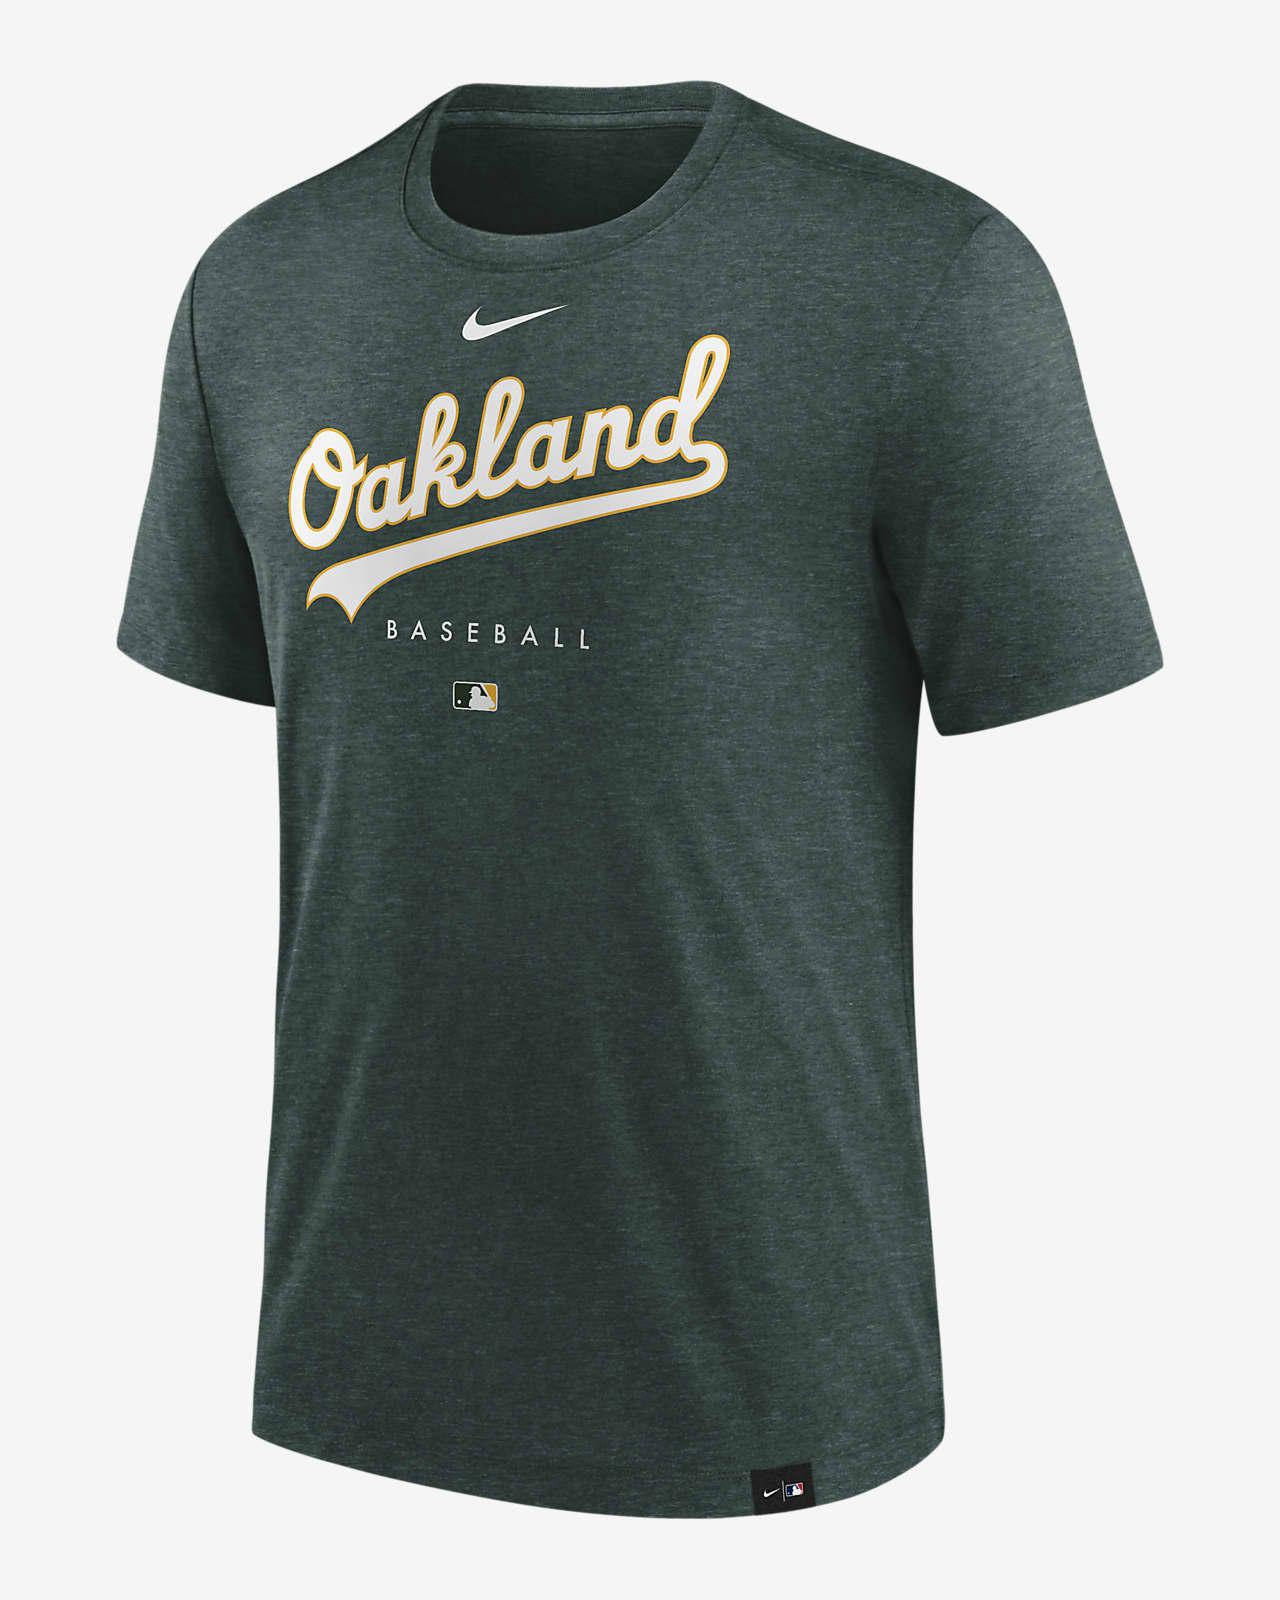 oakland athletic shirt